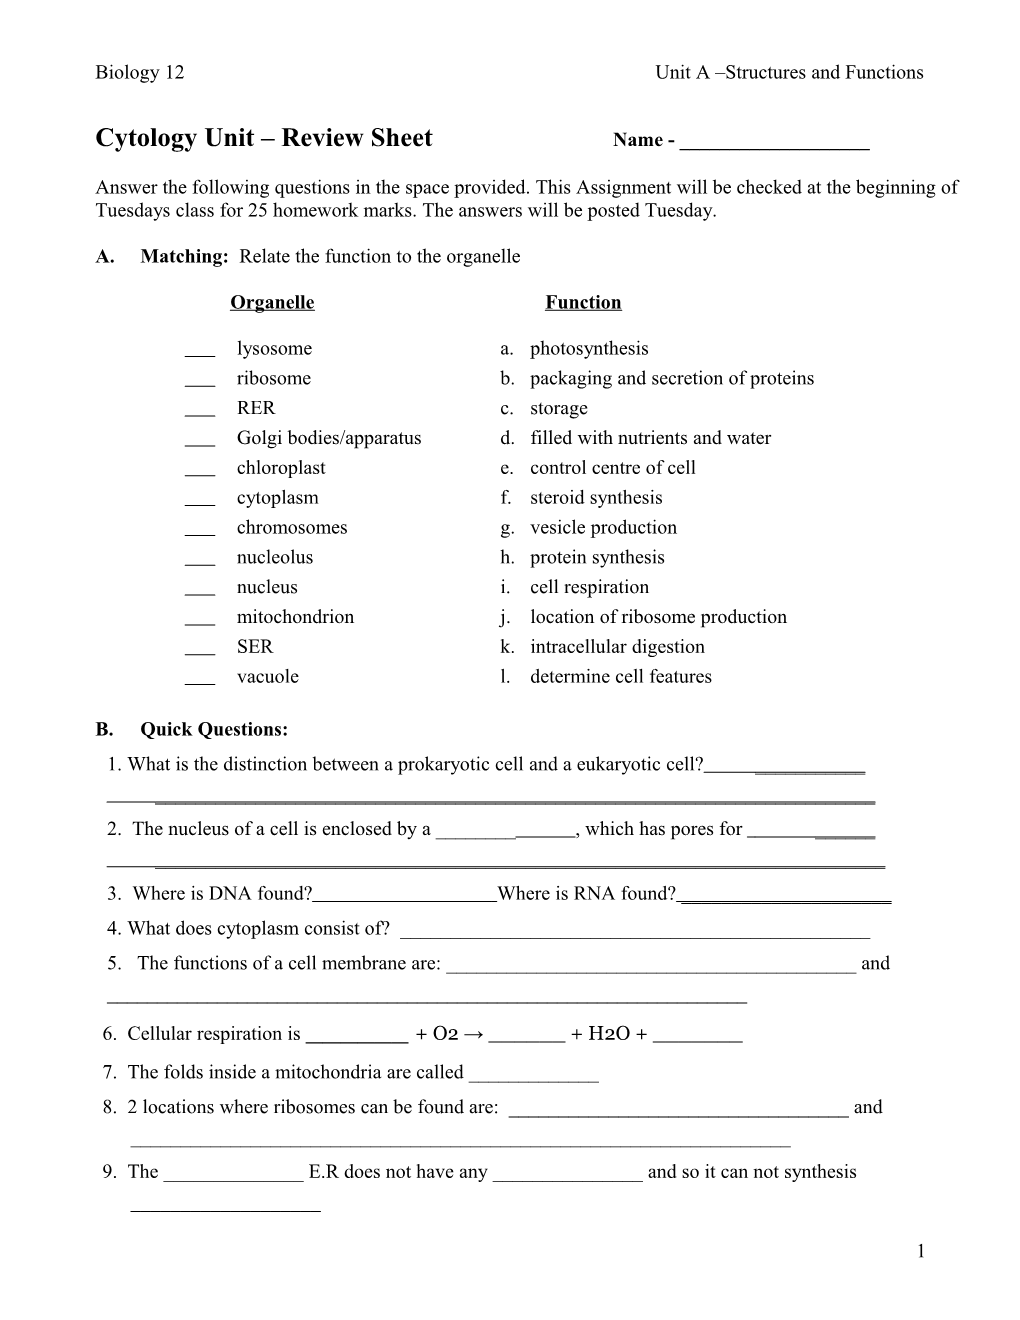 Cytology Unit Review Sheet